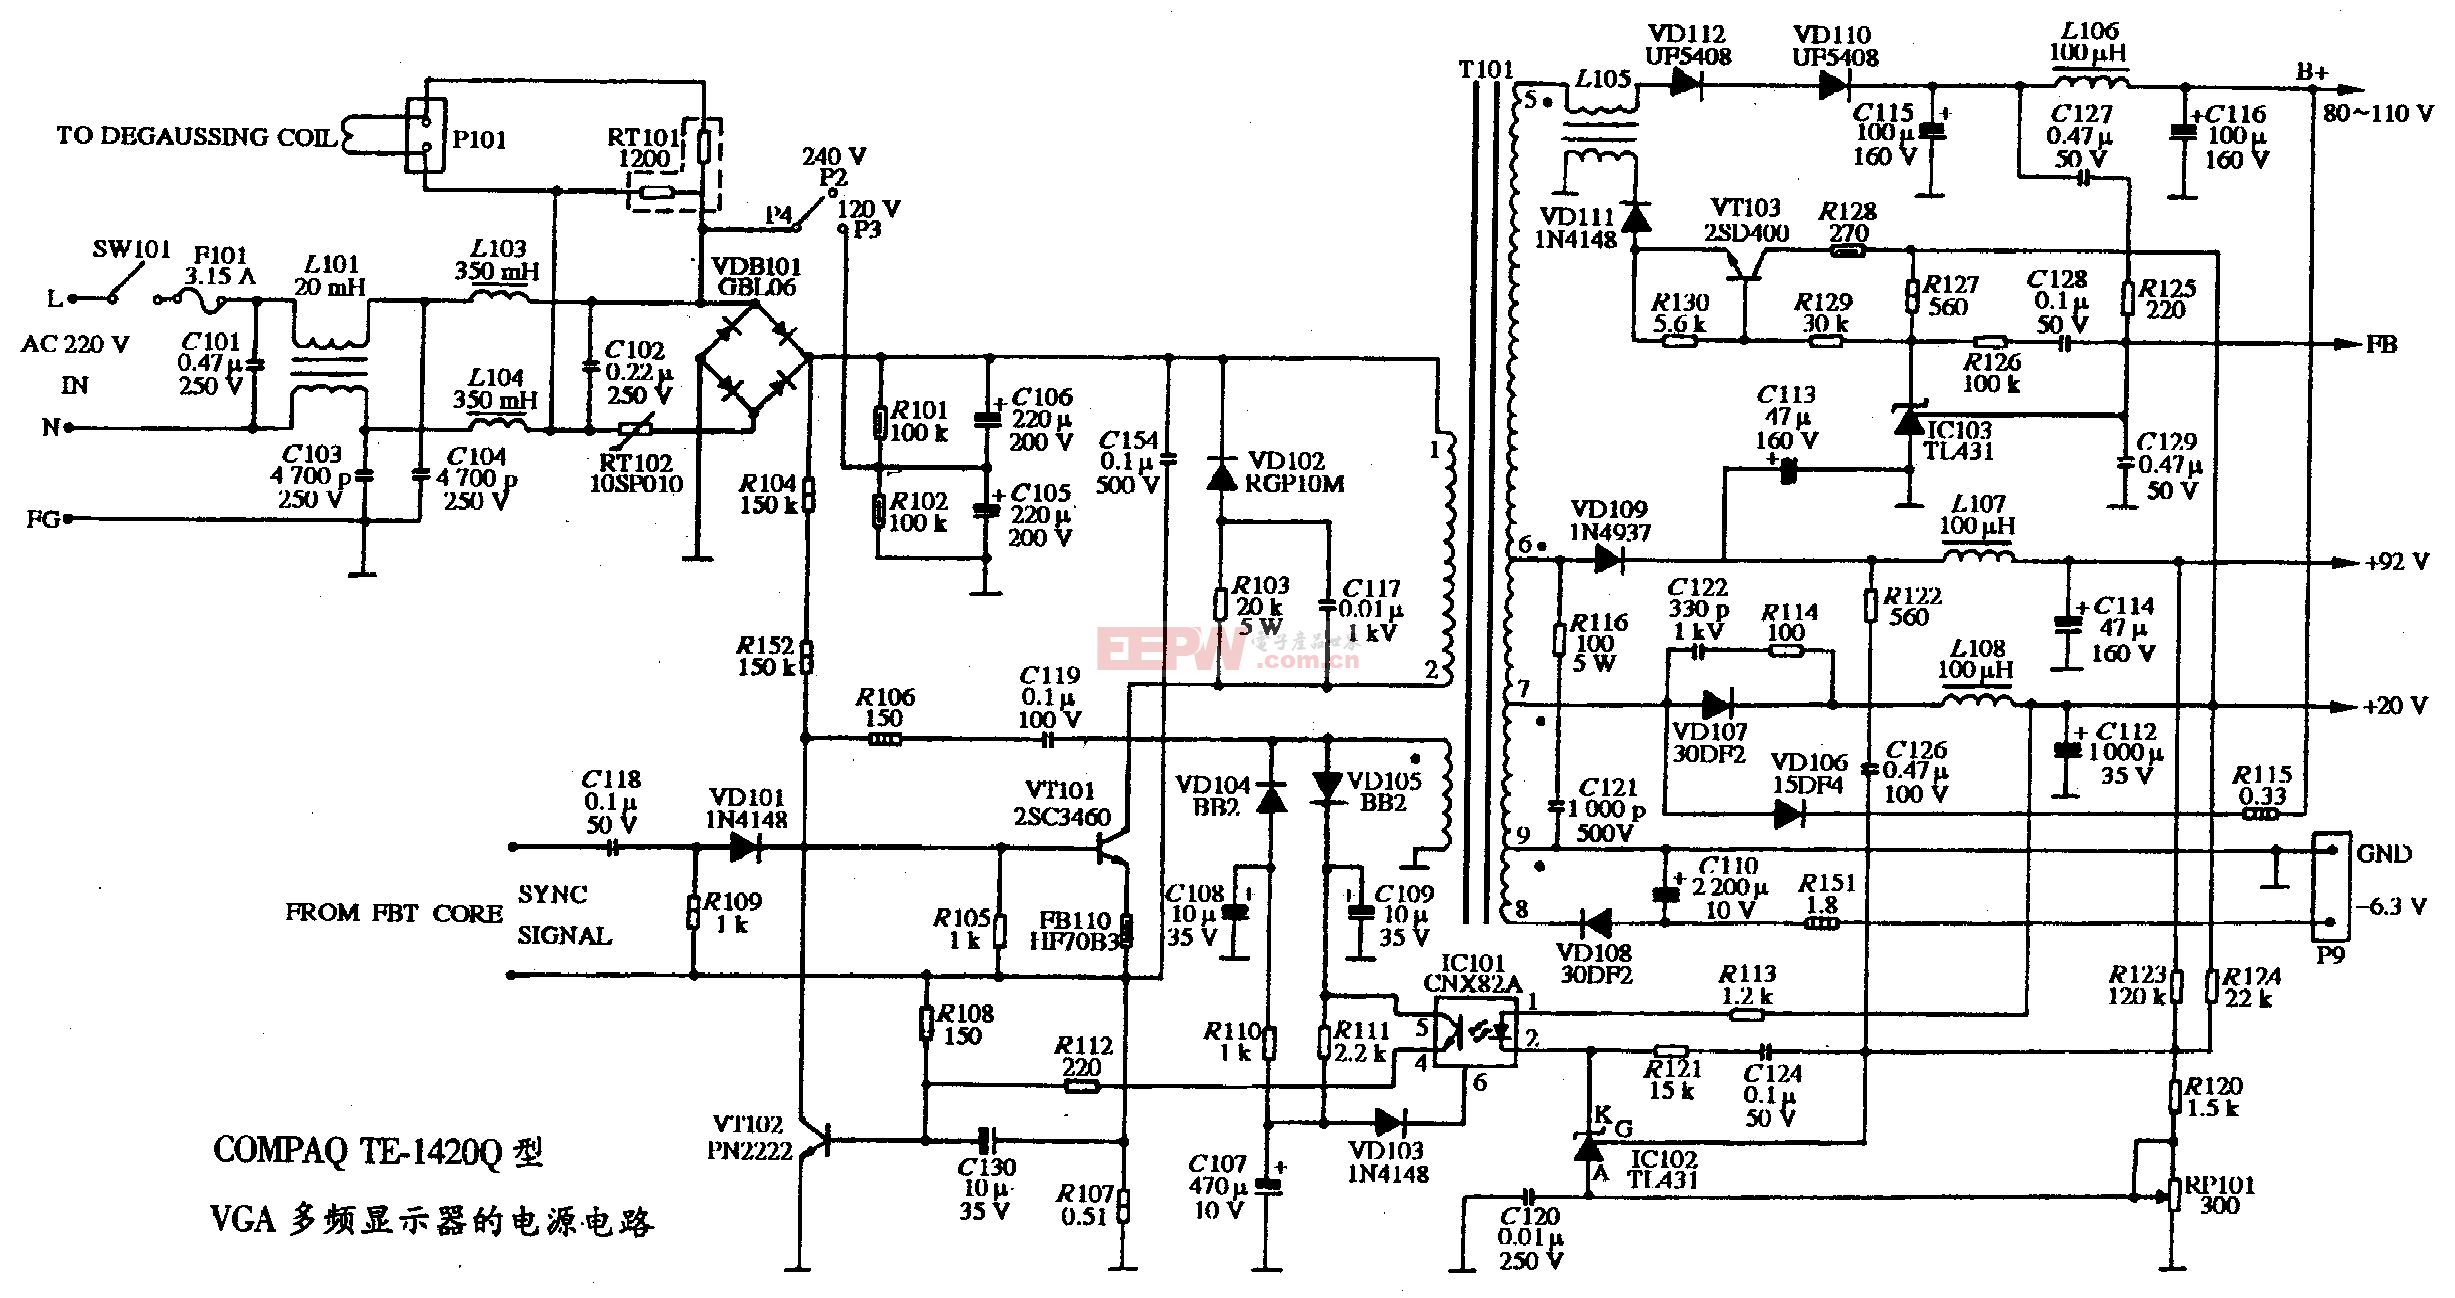 30、COMPAQ TE-1420Q型VGA多频显示器的电源电路图